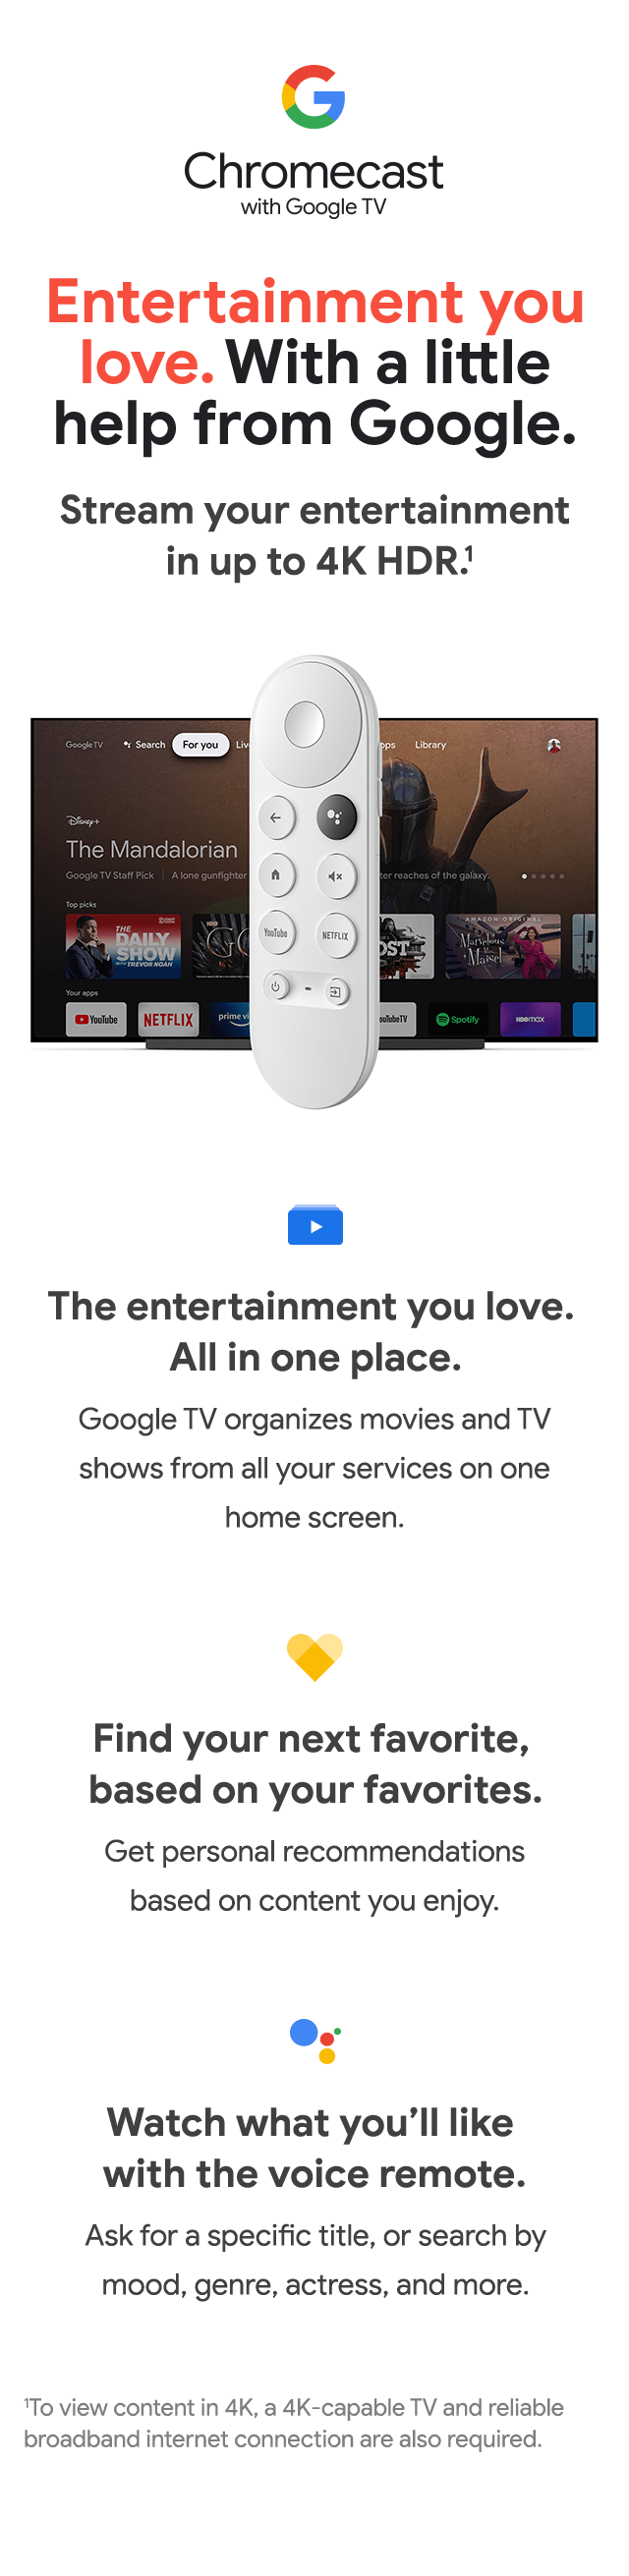 ContiMarket. Google, Chromecast With Google TV, HD 4K, Snow